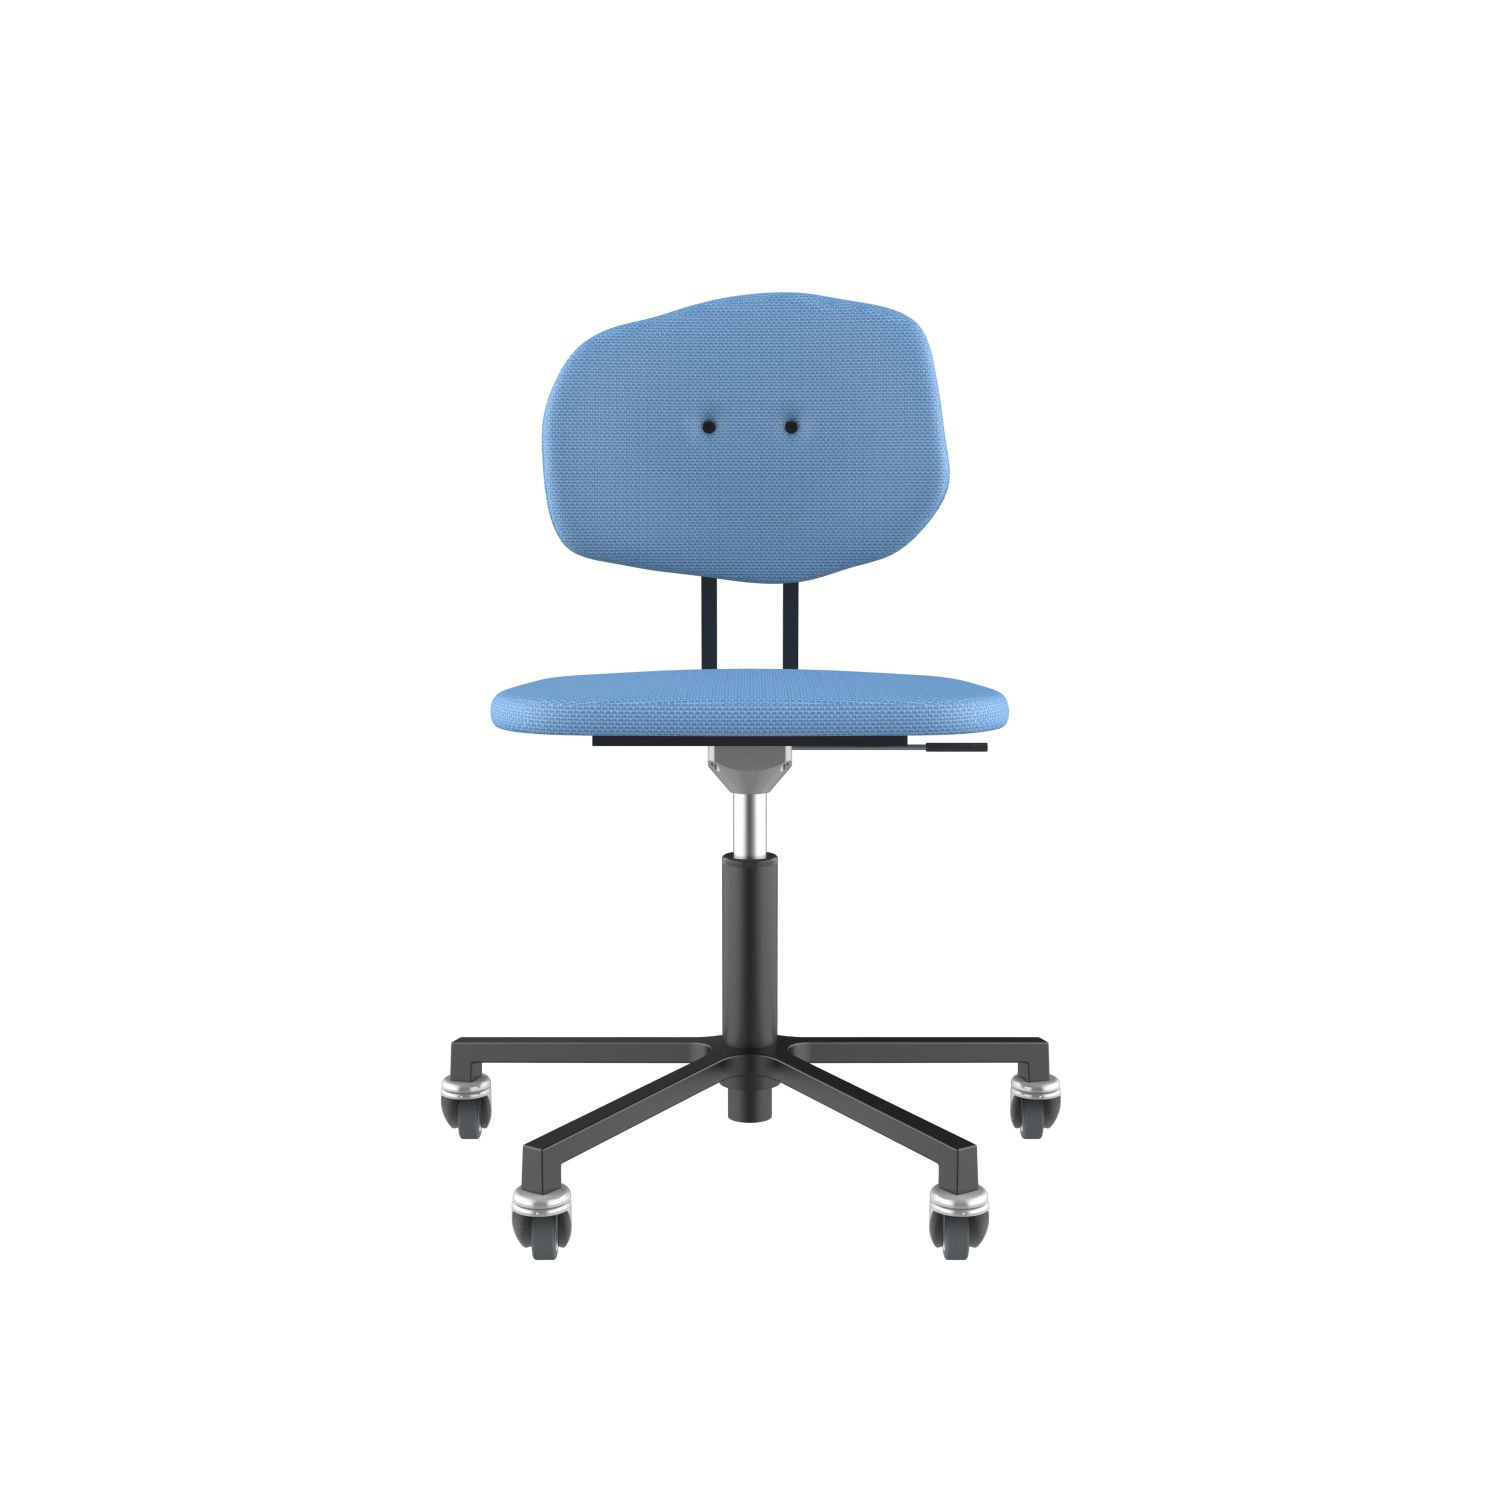 lensvelt maarten baas office chair without armrests backrest e blue horizon 040 black ral9005 soft wheels